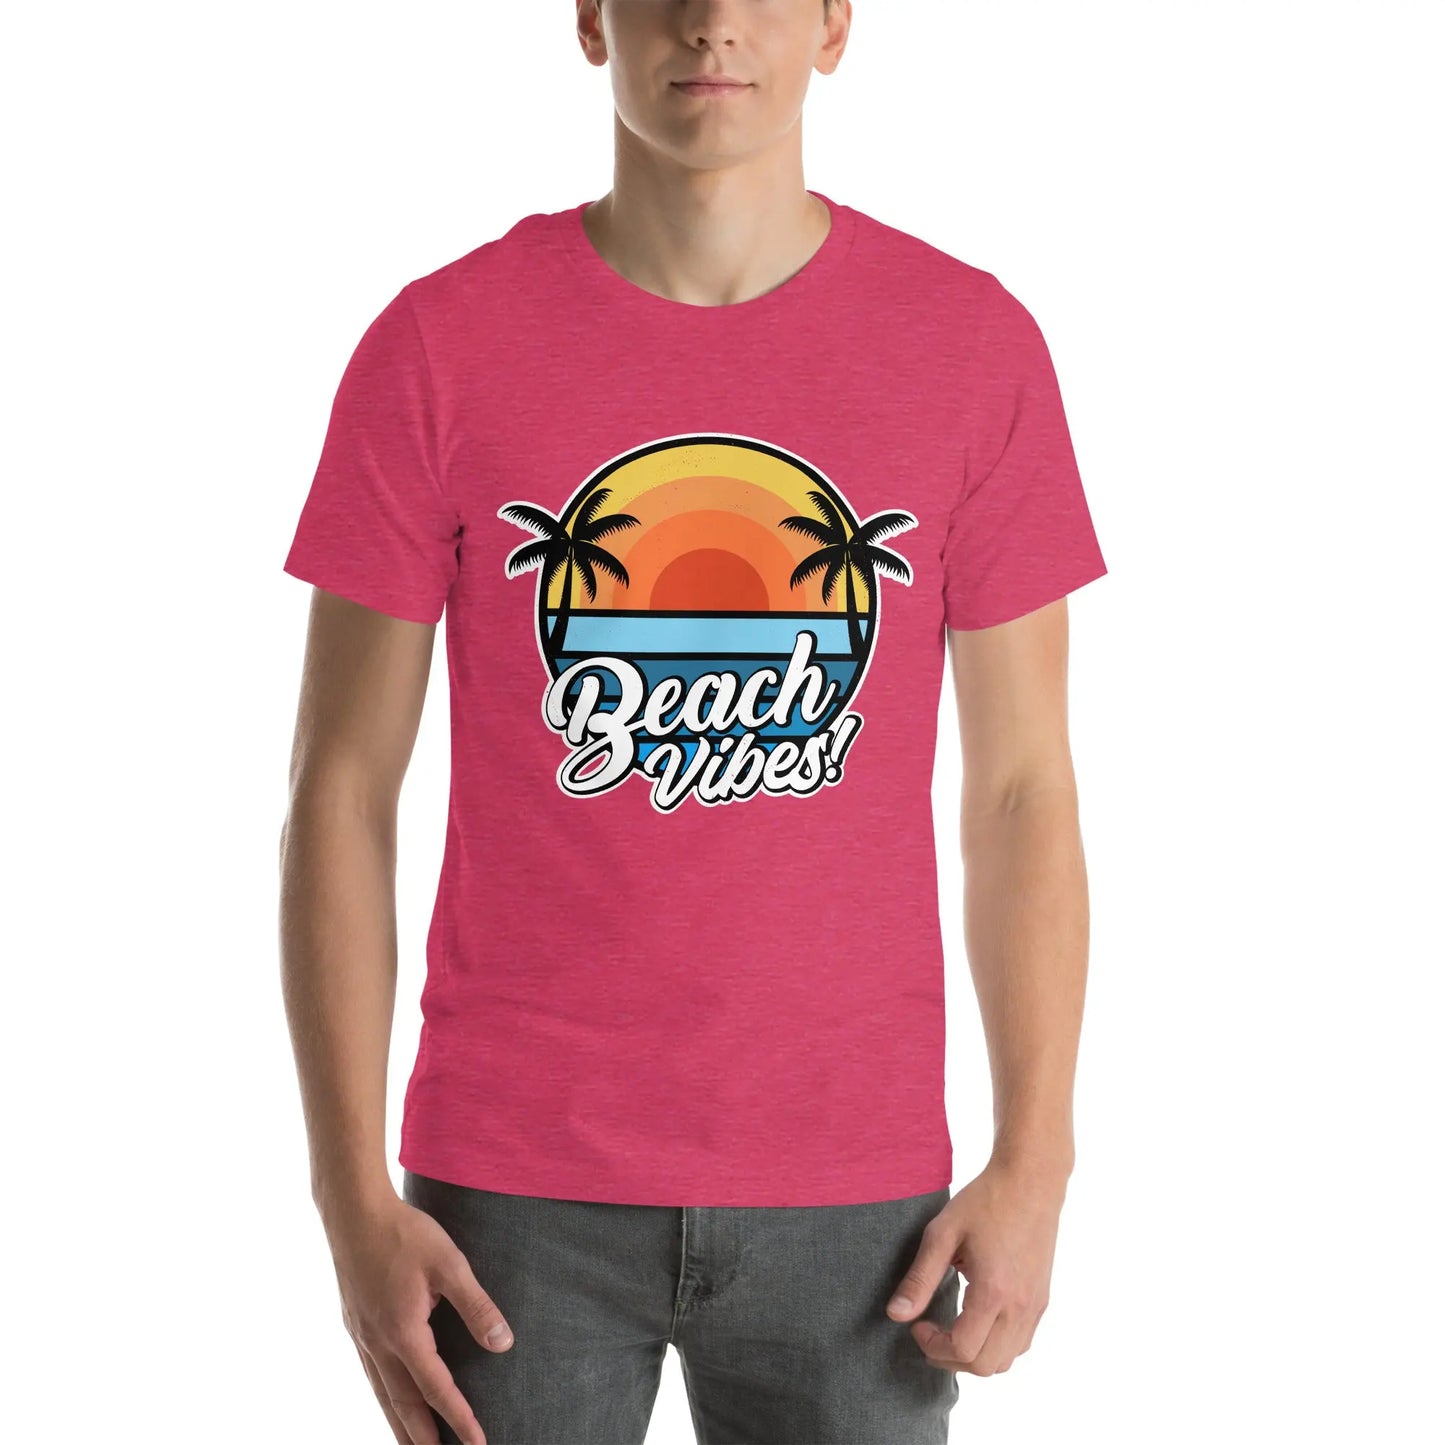 Beach Vibes with this Coastal Adult Unisex T-Shirt - Coastal Journeyz9496443_8523